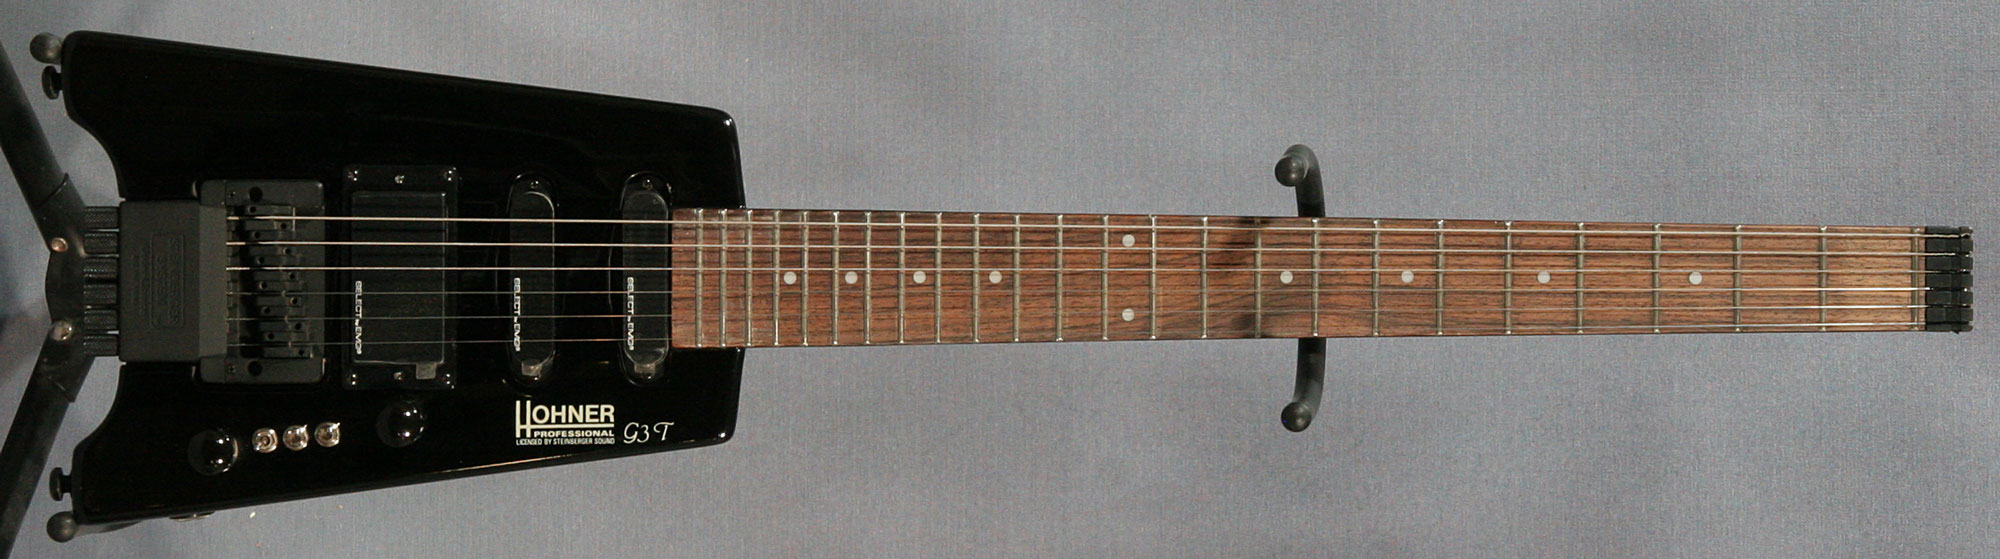 hohner-gt3-headless-guitar-2000.jpg